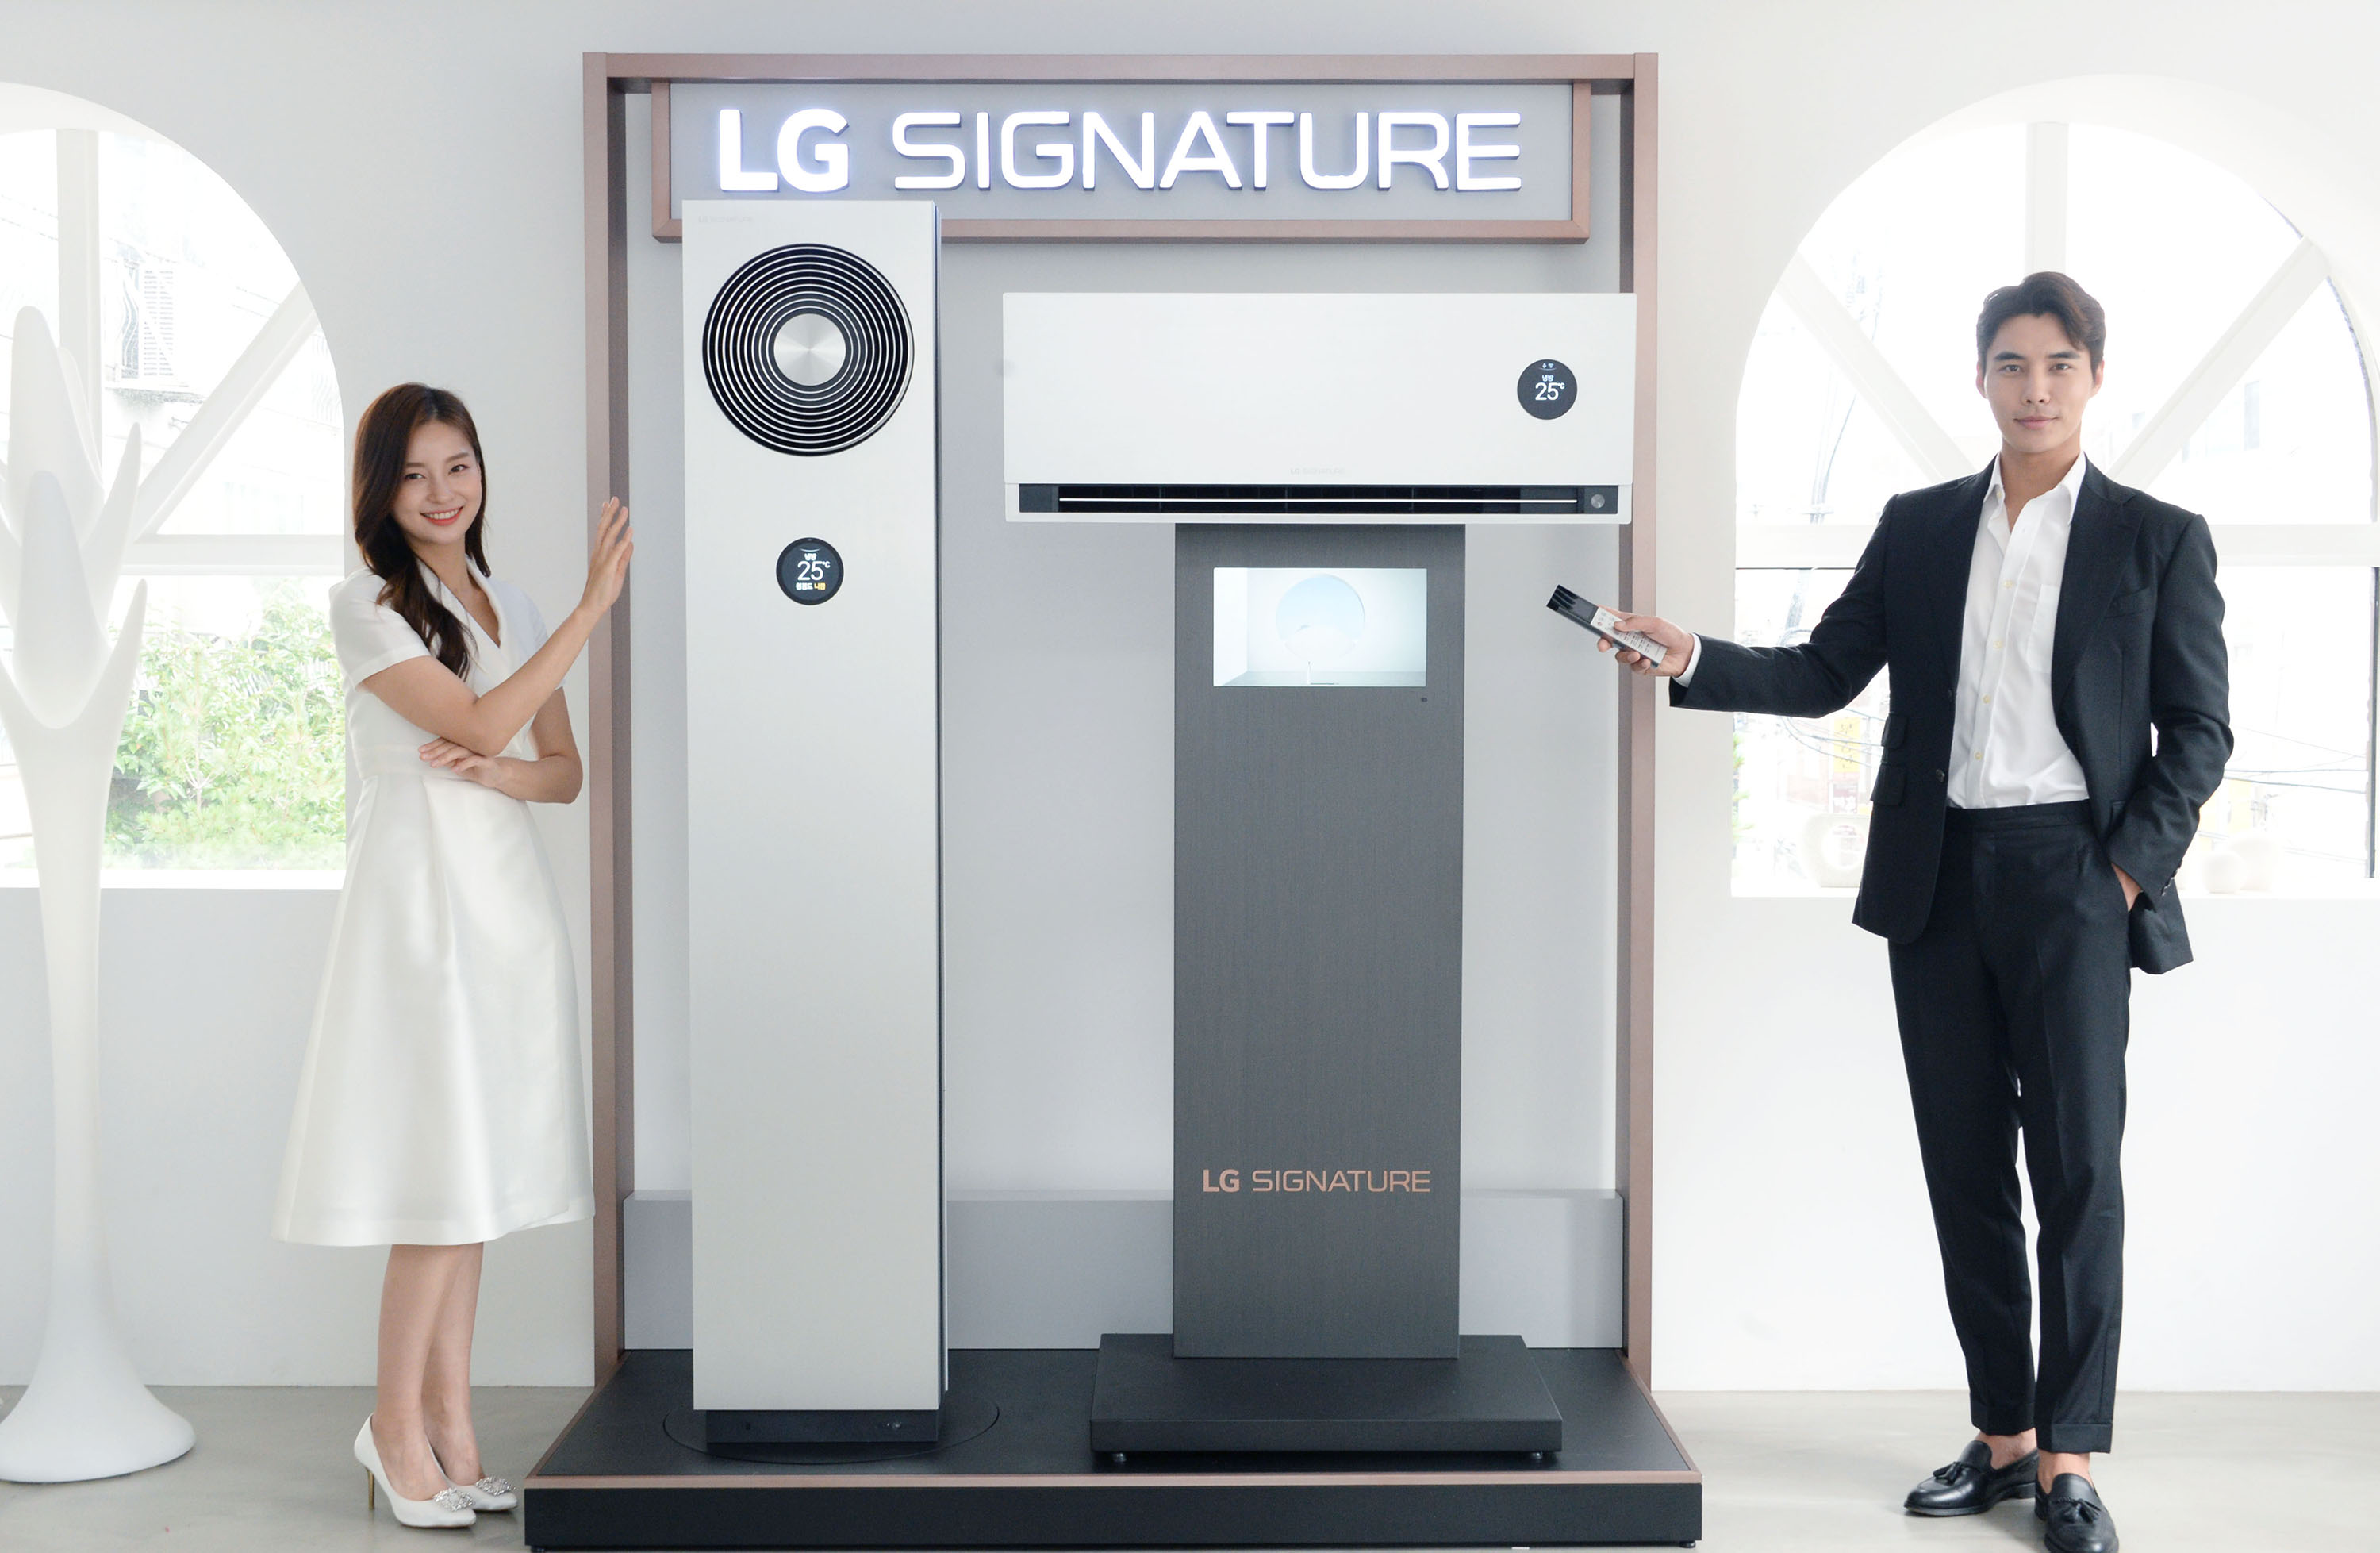 LG전자가 5일 超프리미엄 에어컨인 LG 시그니처(LG SIGNATURE) 에어컨을 출시했다. 사진은 모델이 LG 시그니처(LG SIGNATURE) 에어컨을 소개하는 모습.  